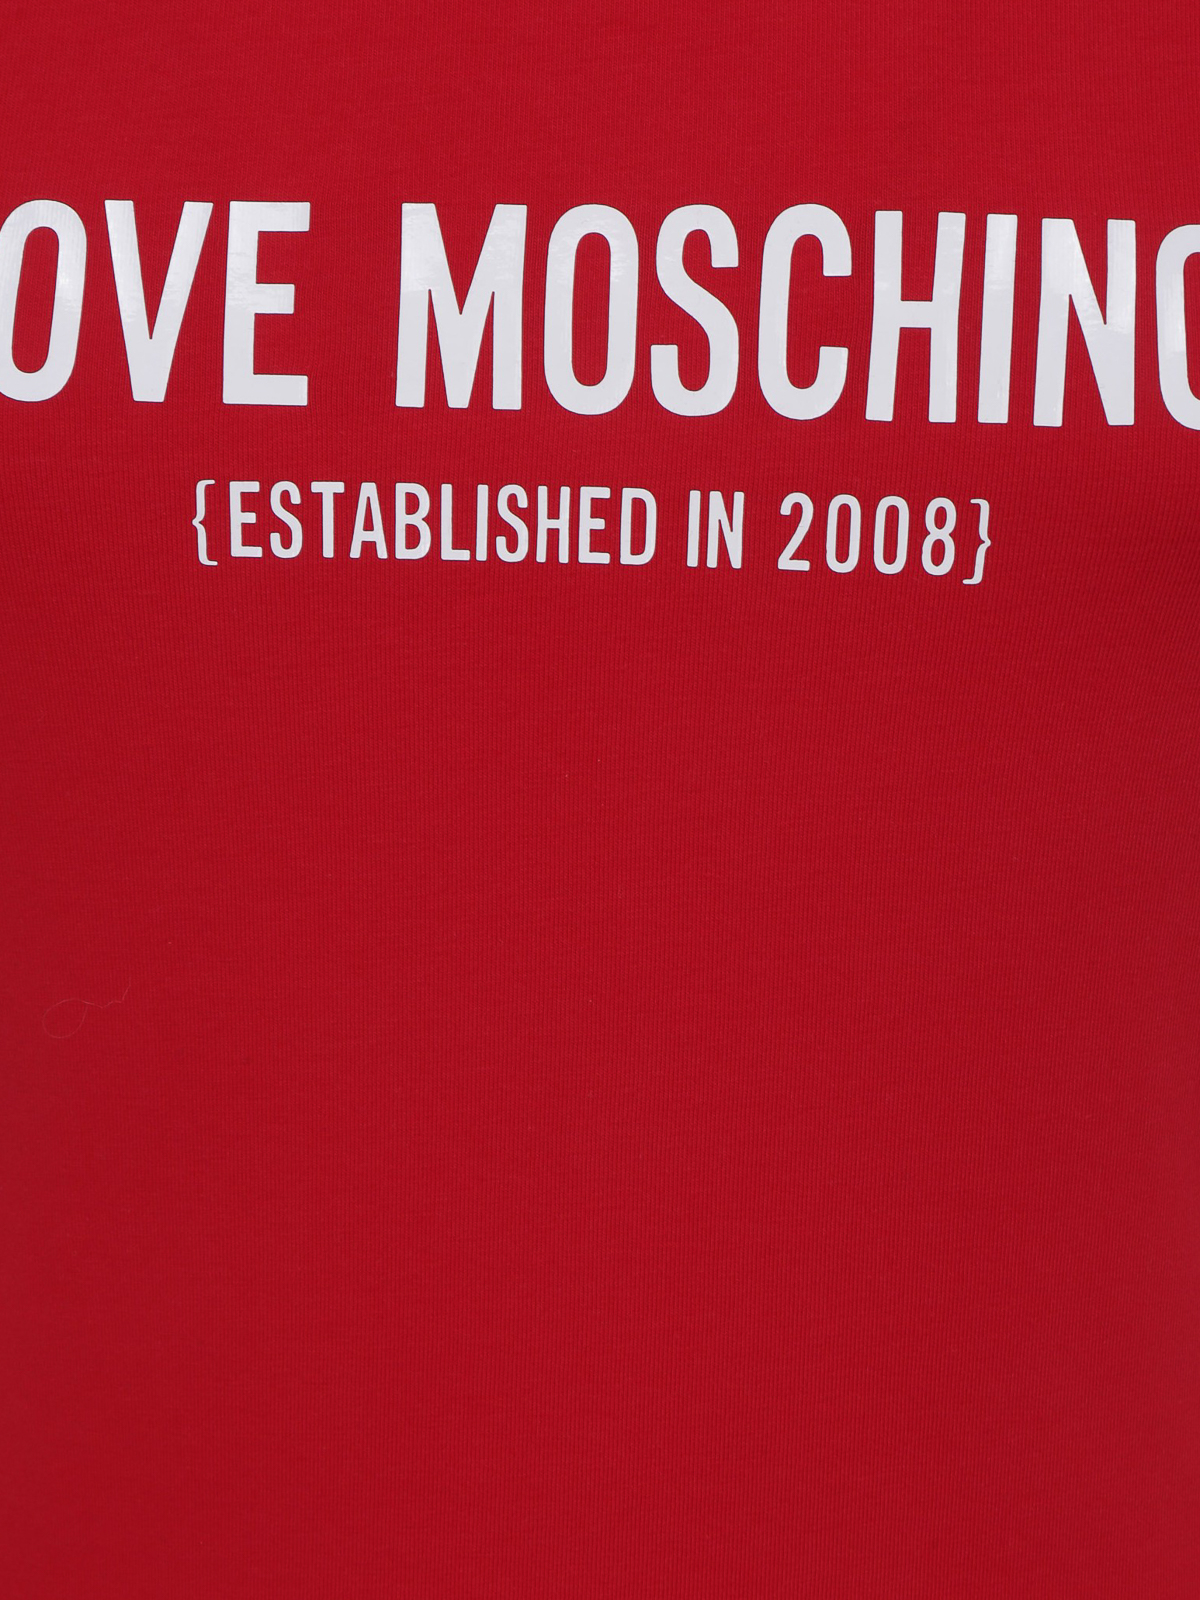 love moschino logo